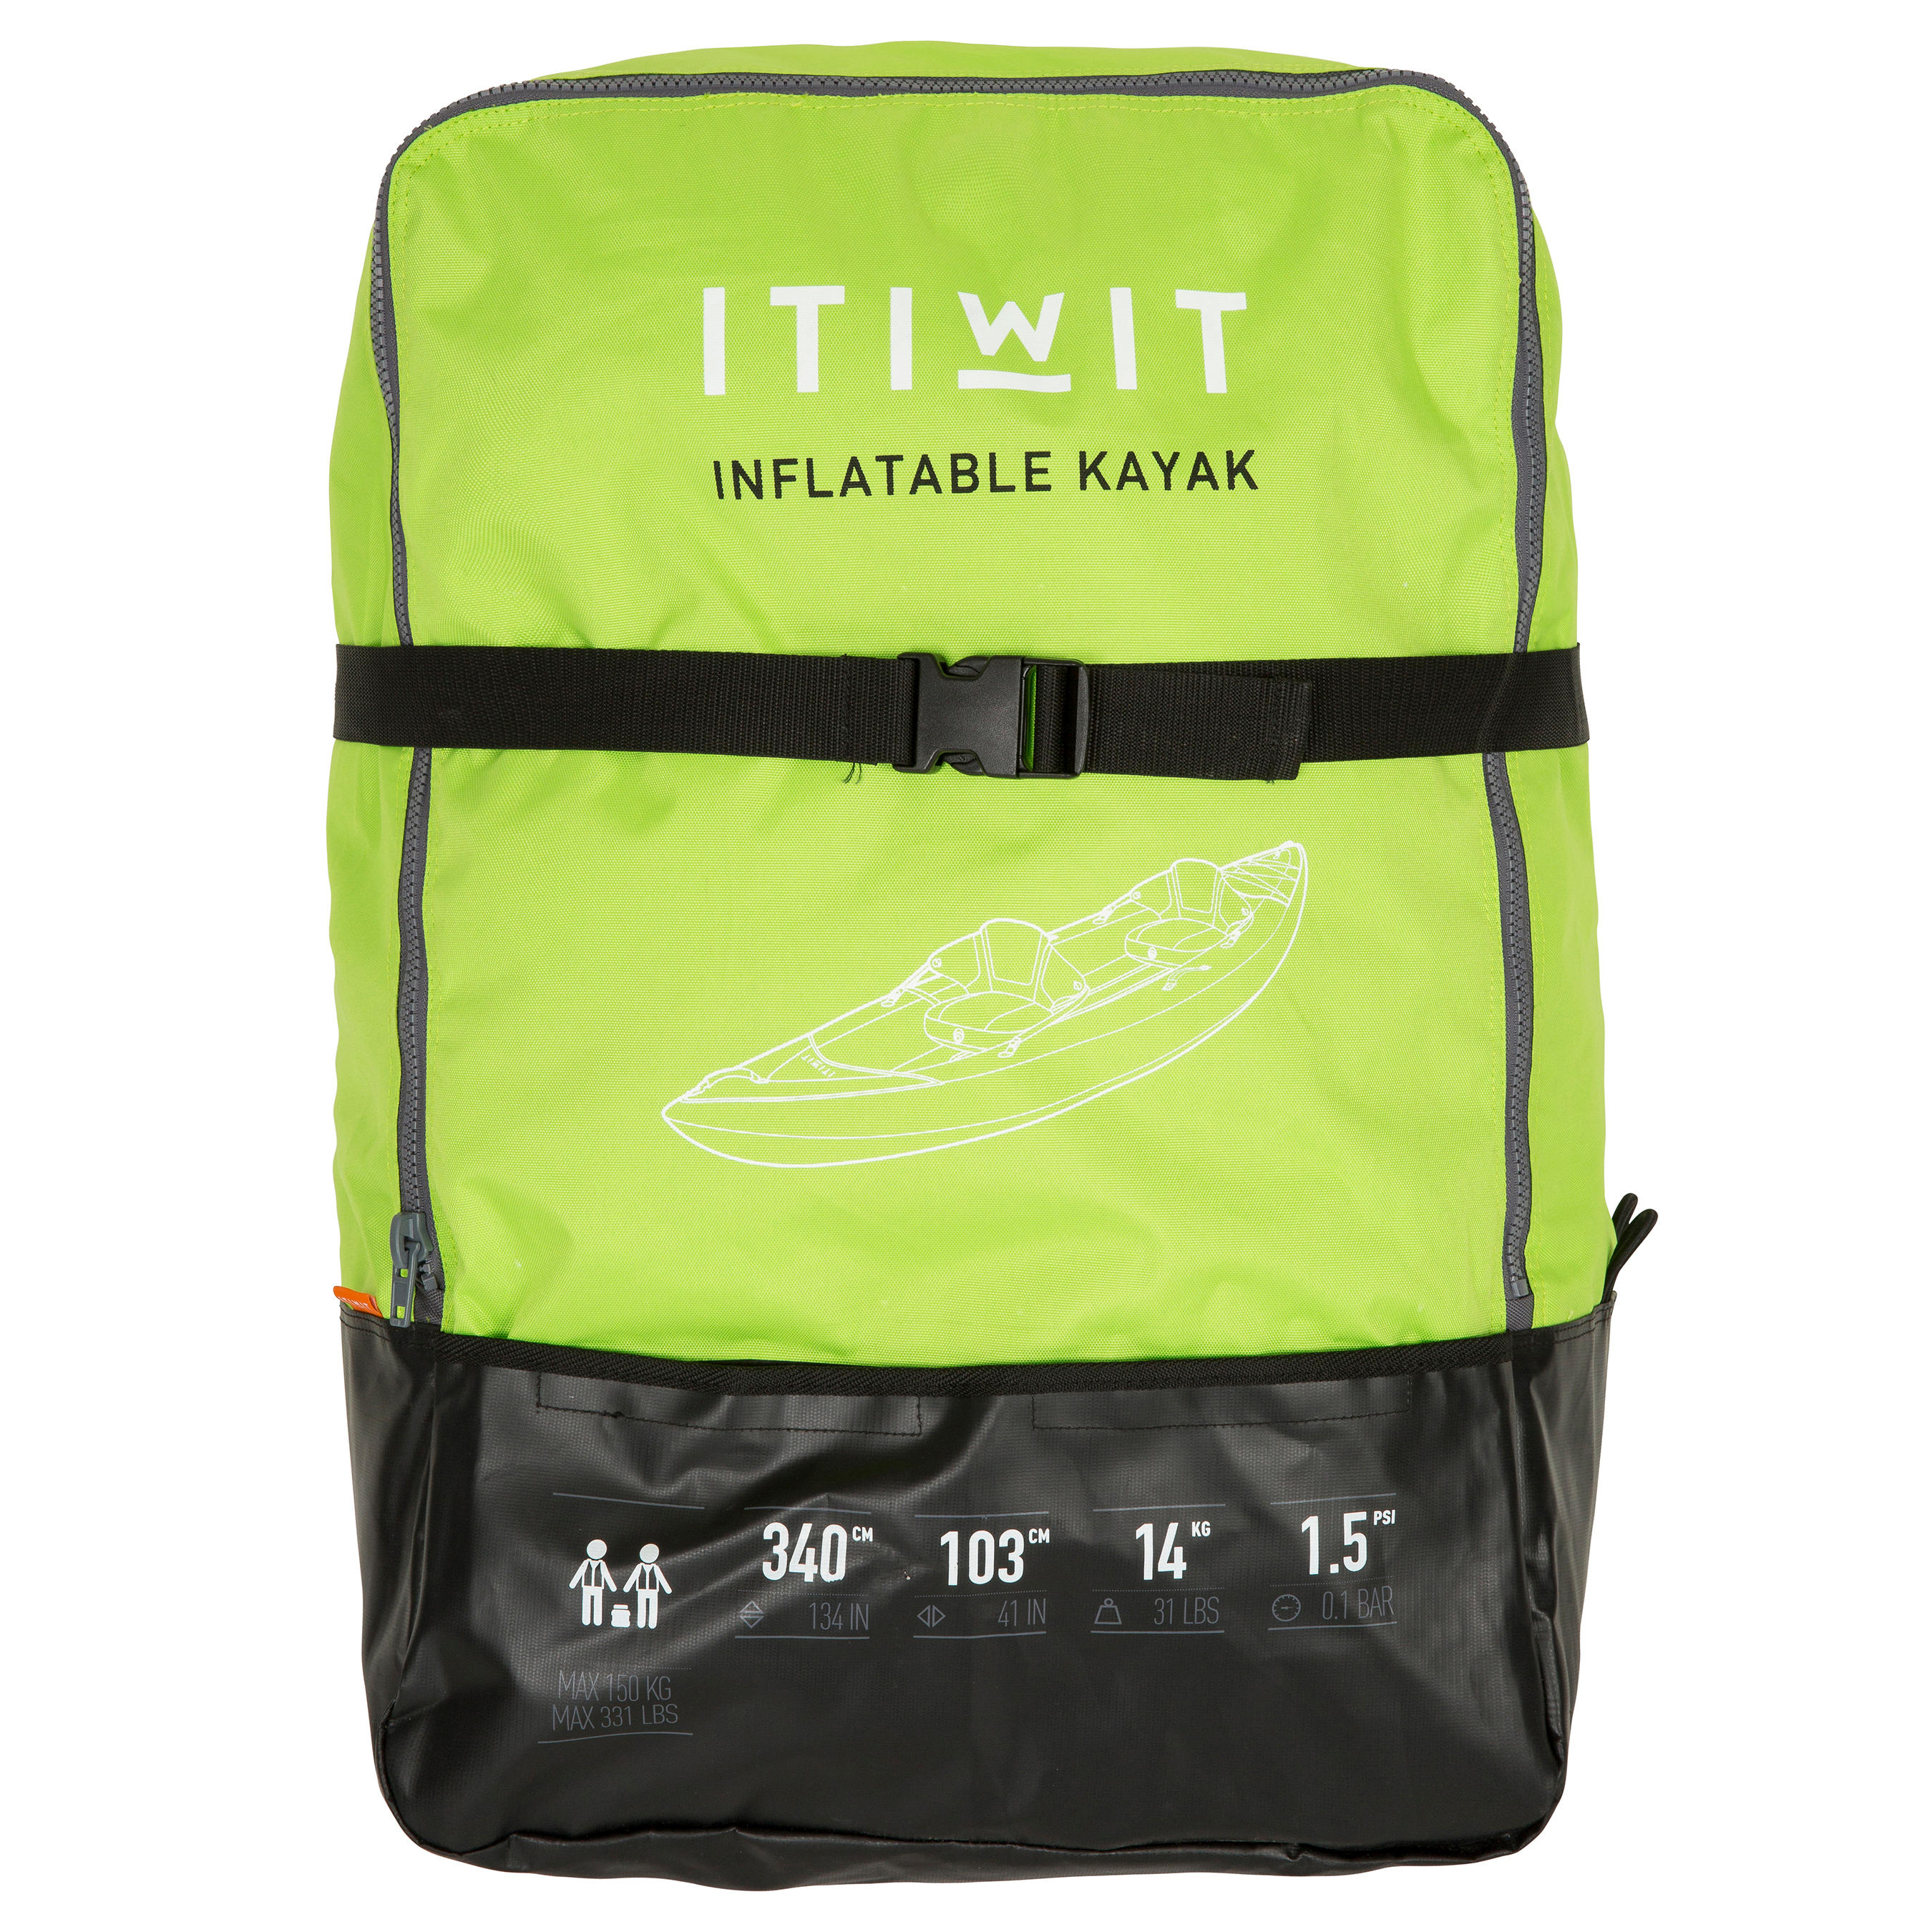 Kayak gonflable 2 personnes - KTI 100 vert - ITIWIT